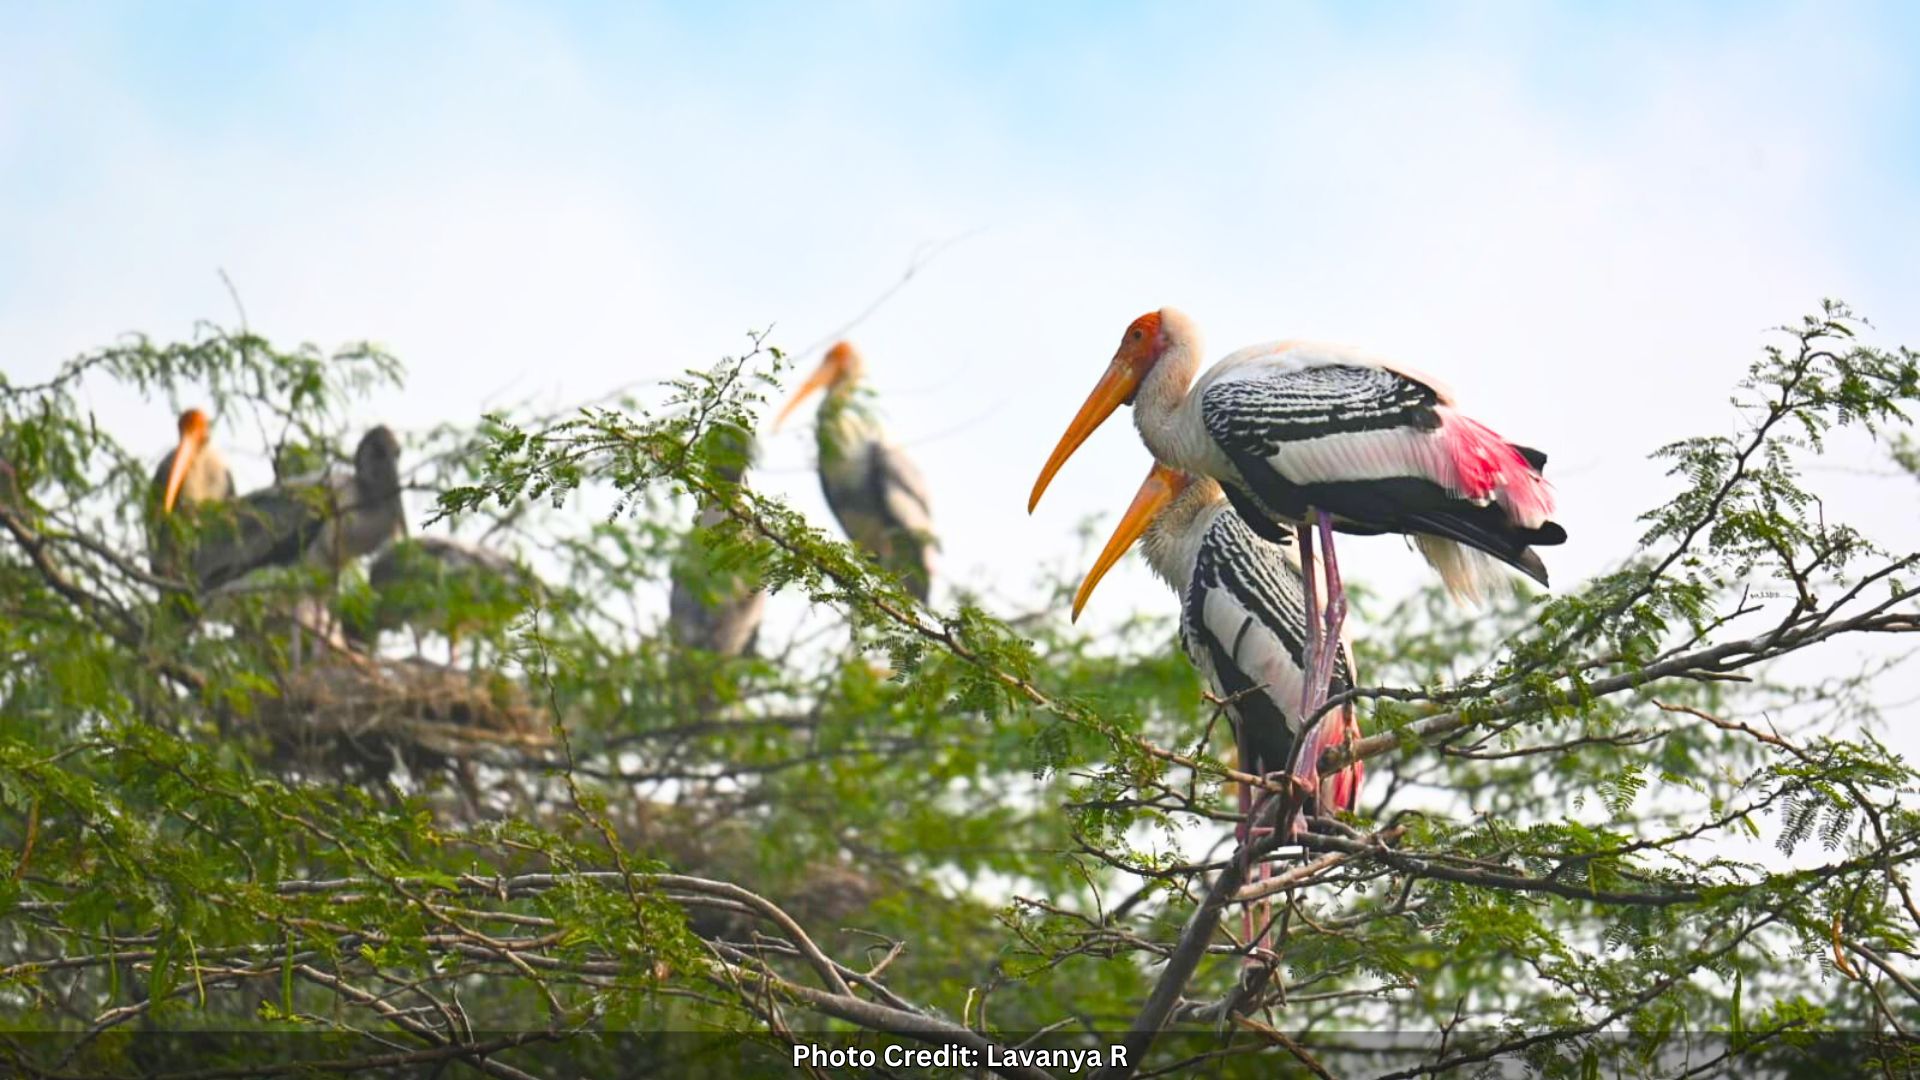 Uttarakhand Forest Department Opens Its First-Ever Bird Gallery In Dehradun